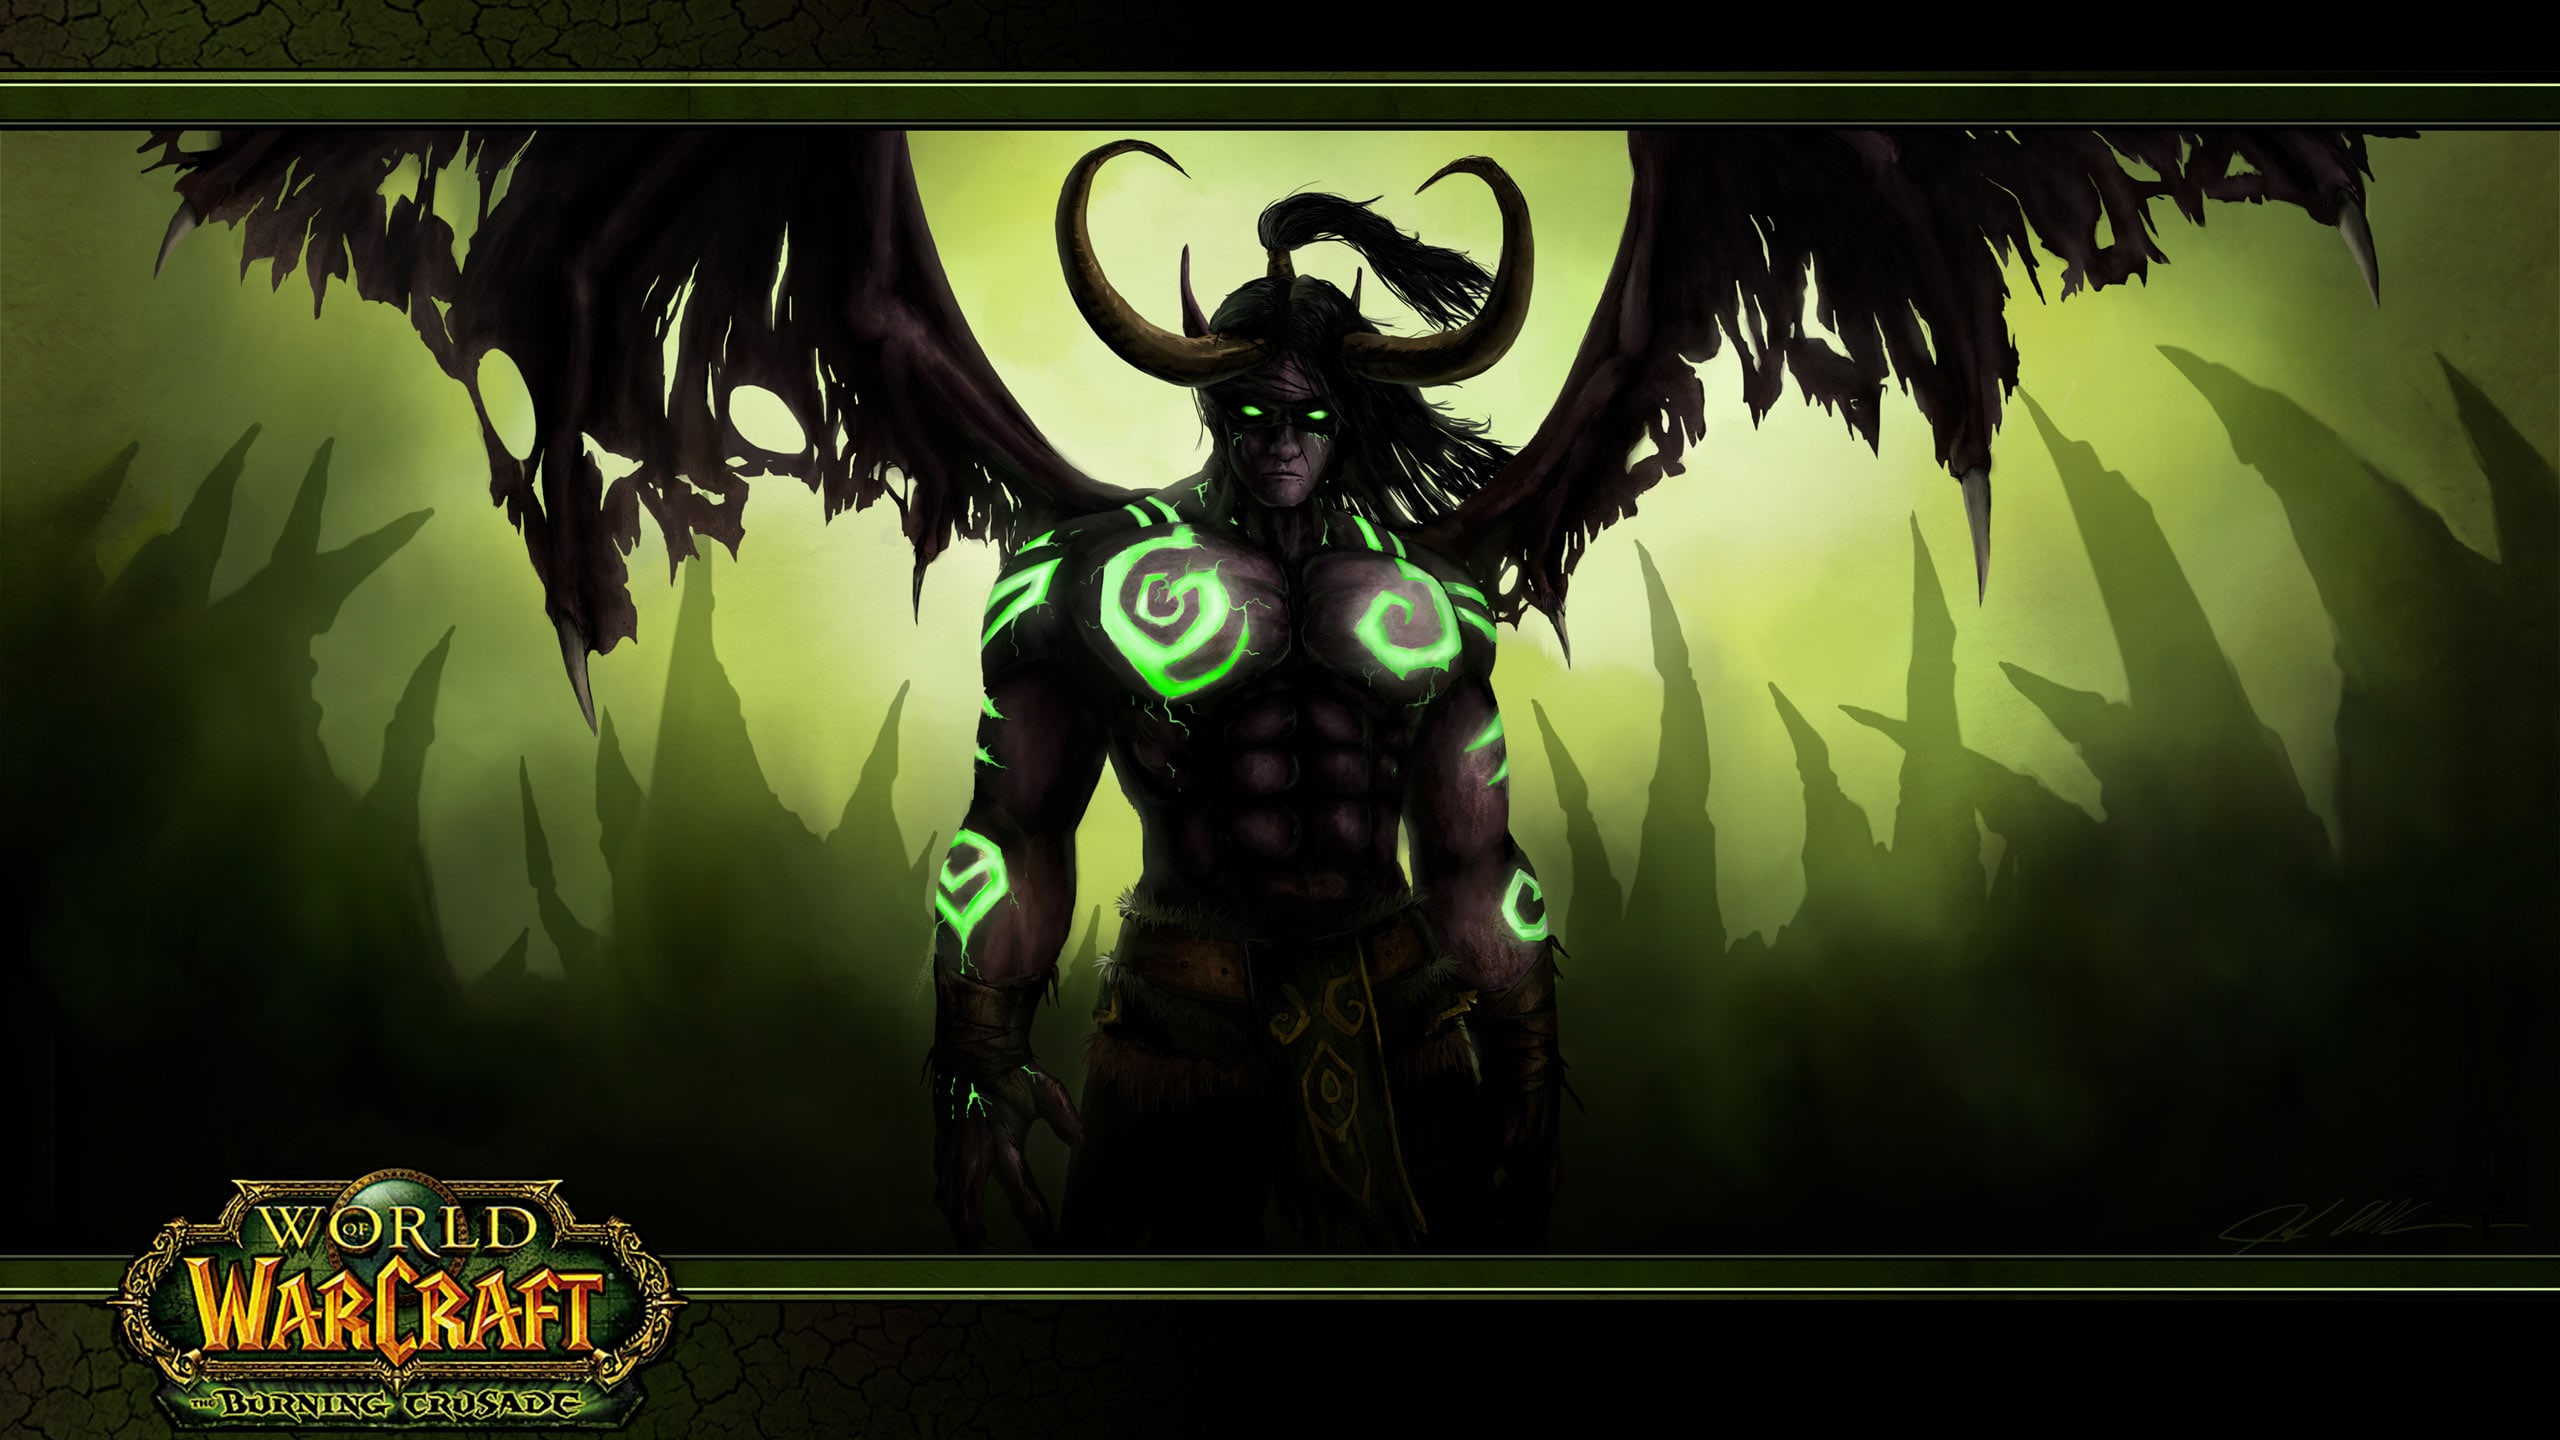 Illidan Stormrage, The Betrayer by Mr--Jack  Illidan stormrage, Heroes of  the storm, Warcraft heroes